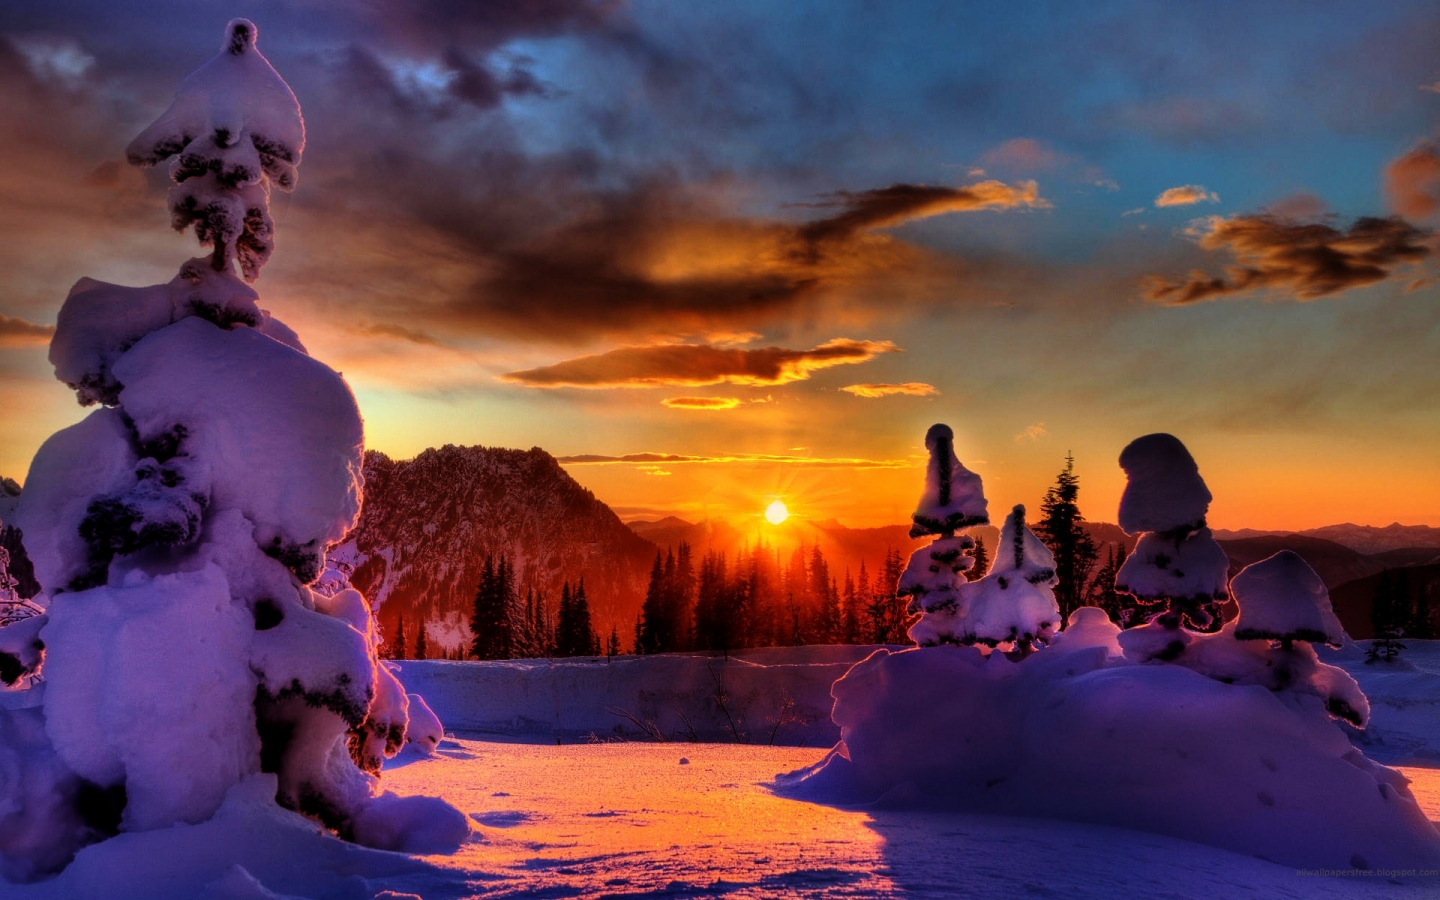 Winter Sunset for 1440 x 900 widescreen resolution